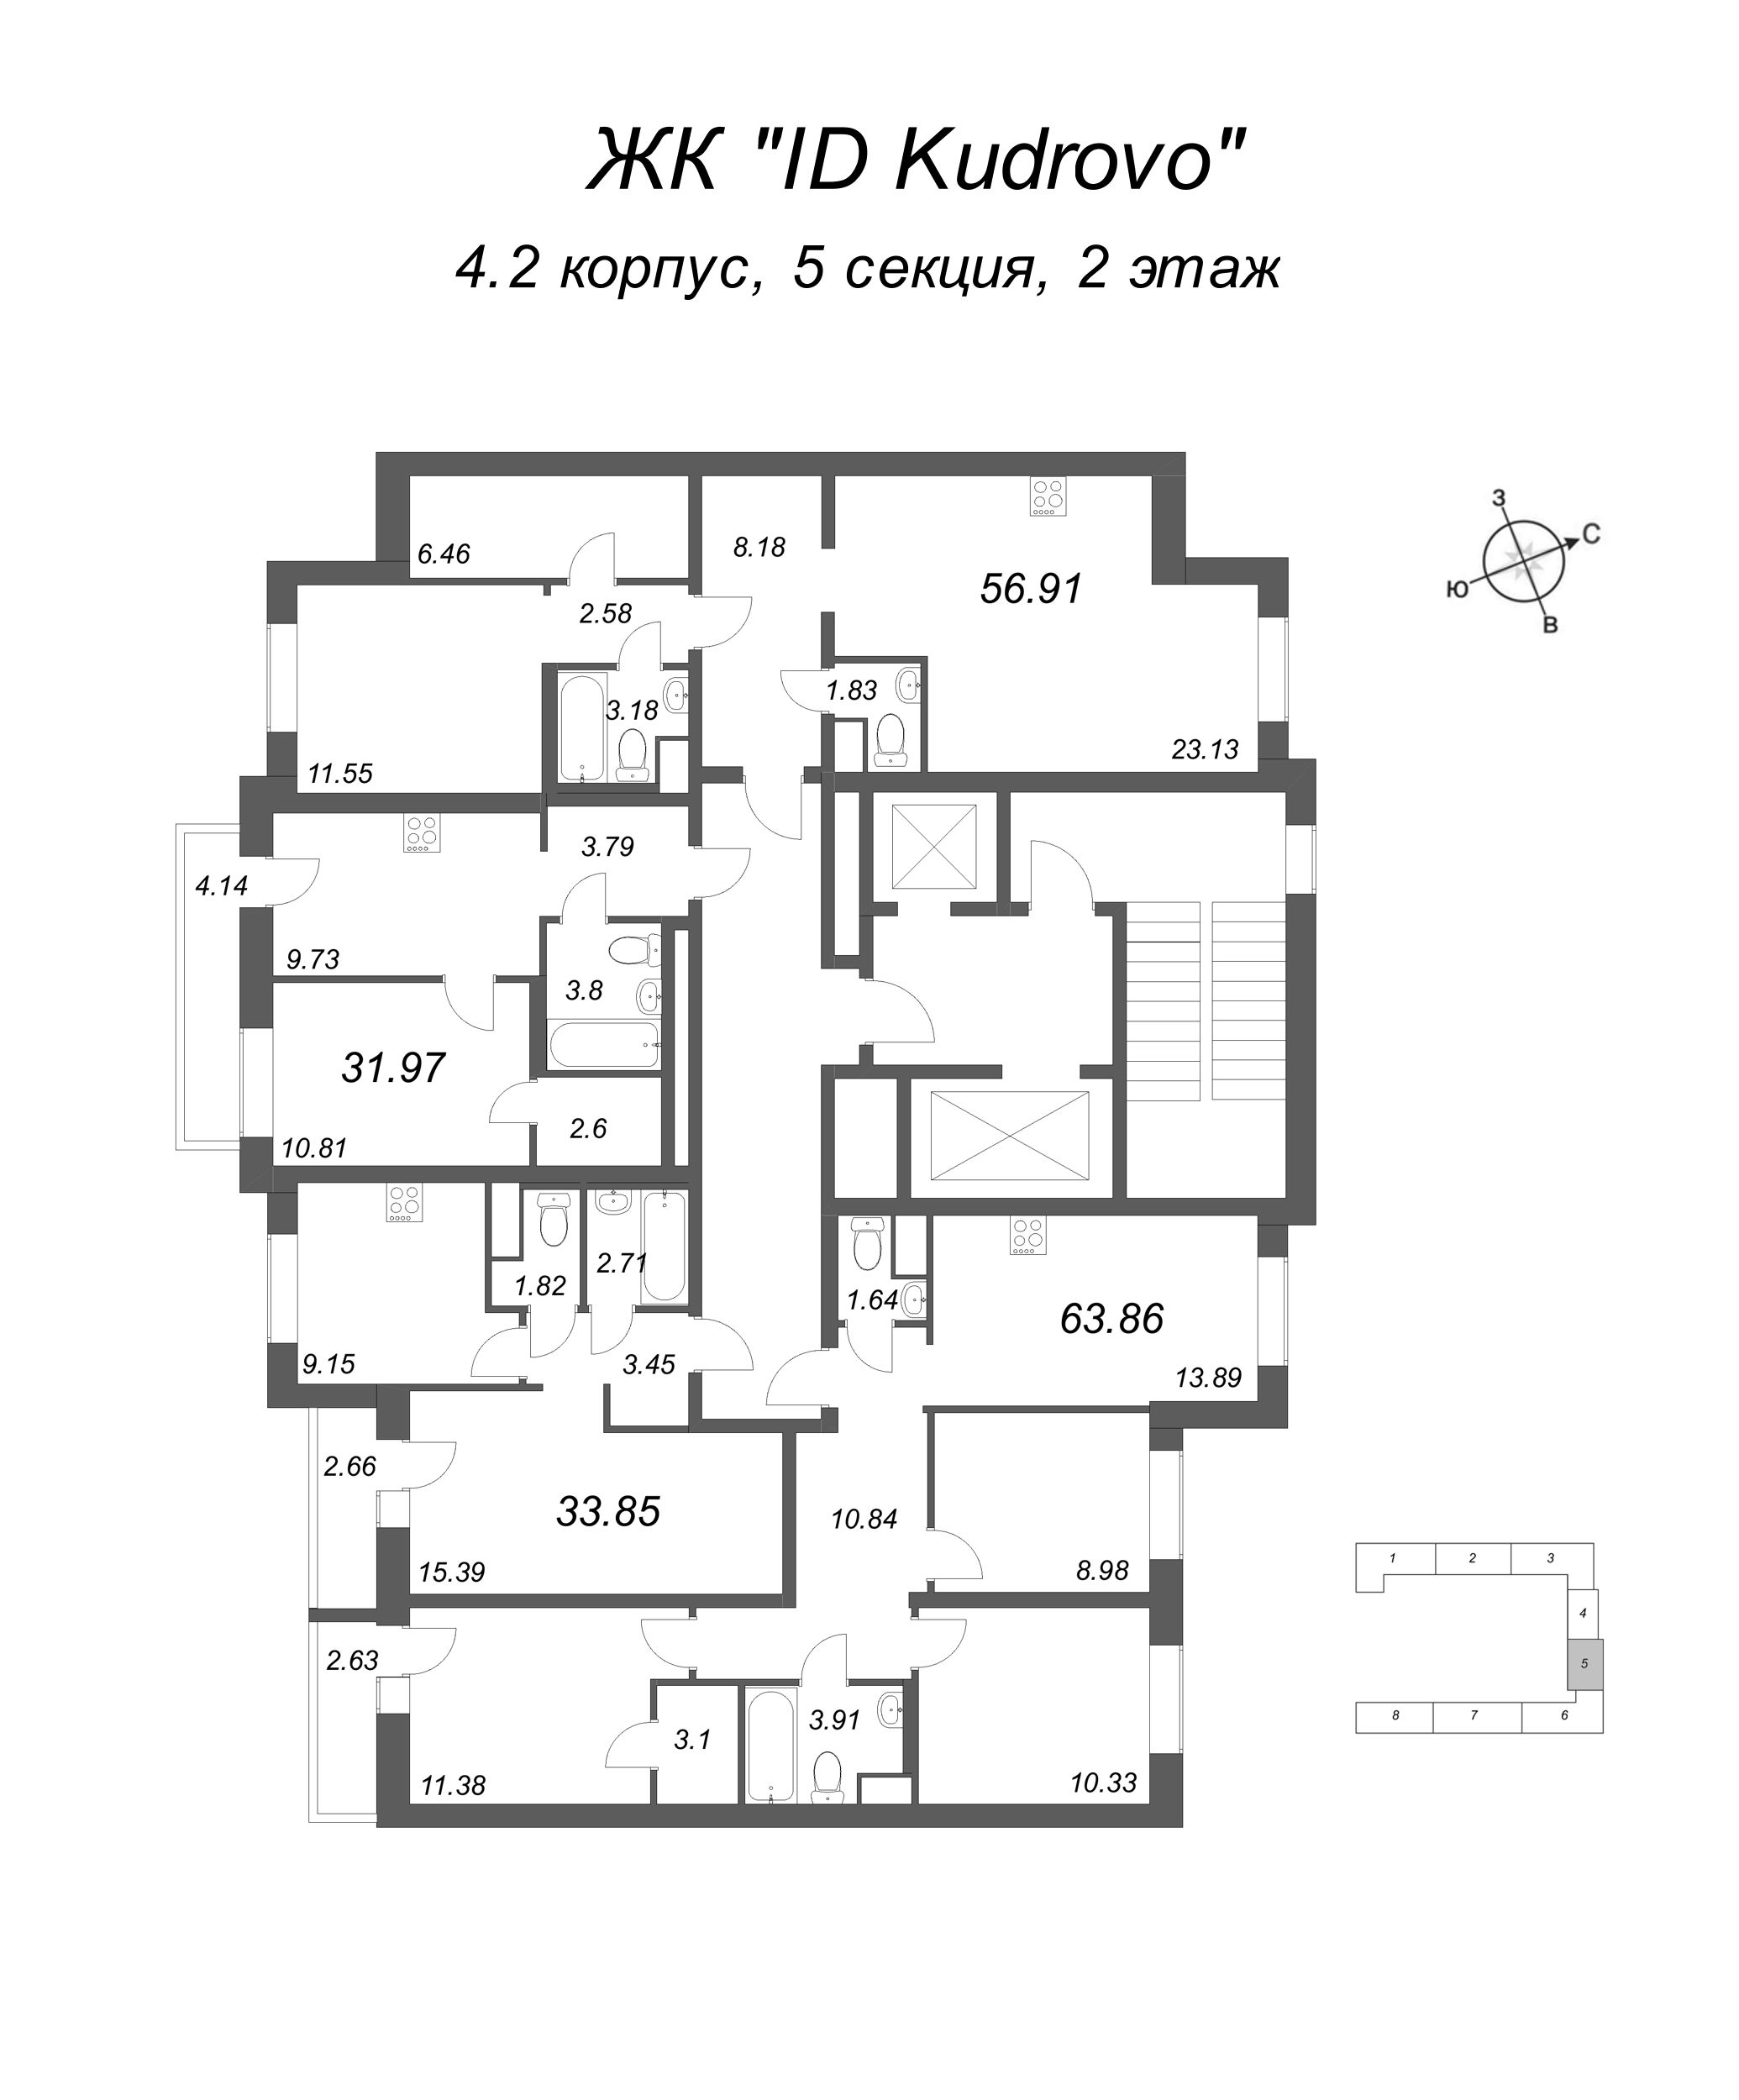 2-комнатная (Евро) квартира, 56.91 м² в ЖК "ID Kudrovo" - планировка этажа